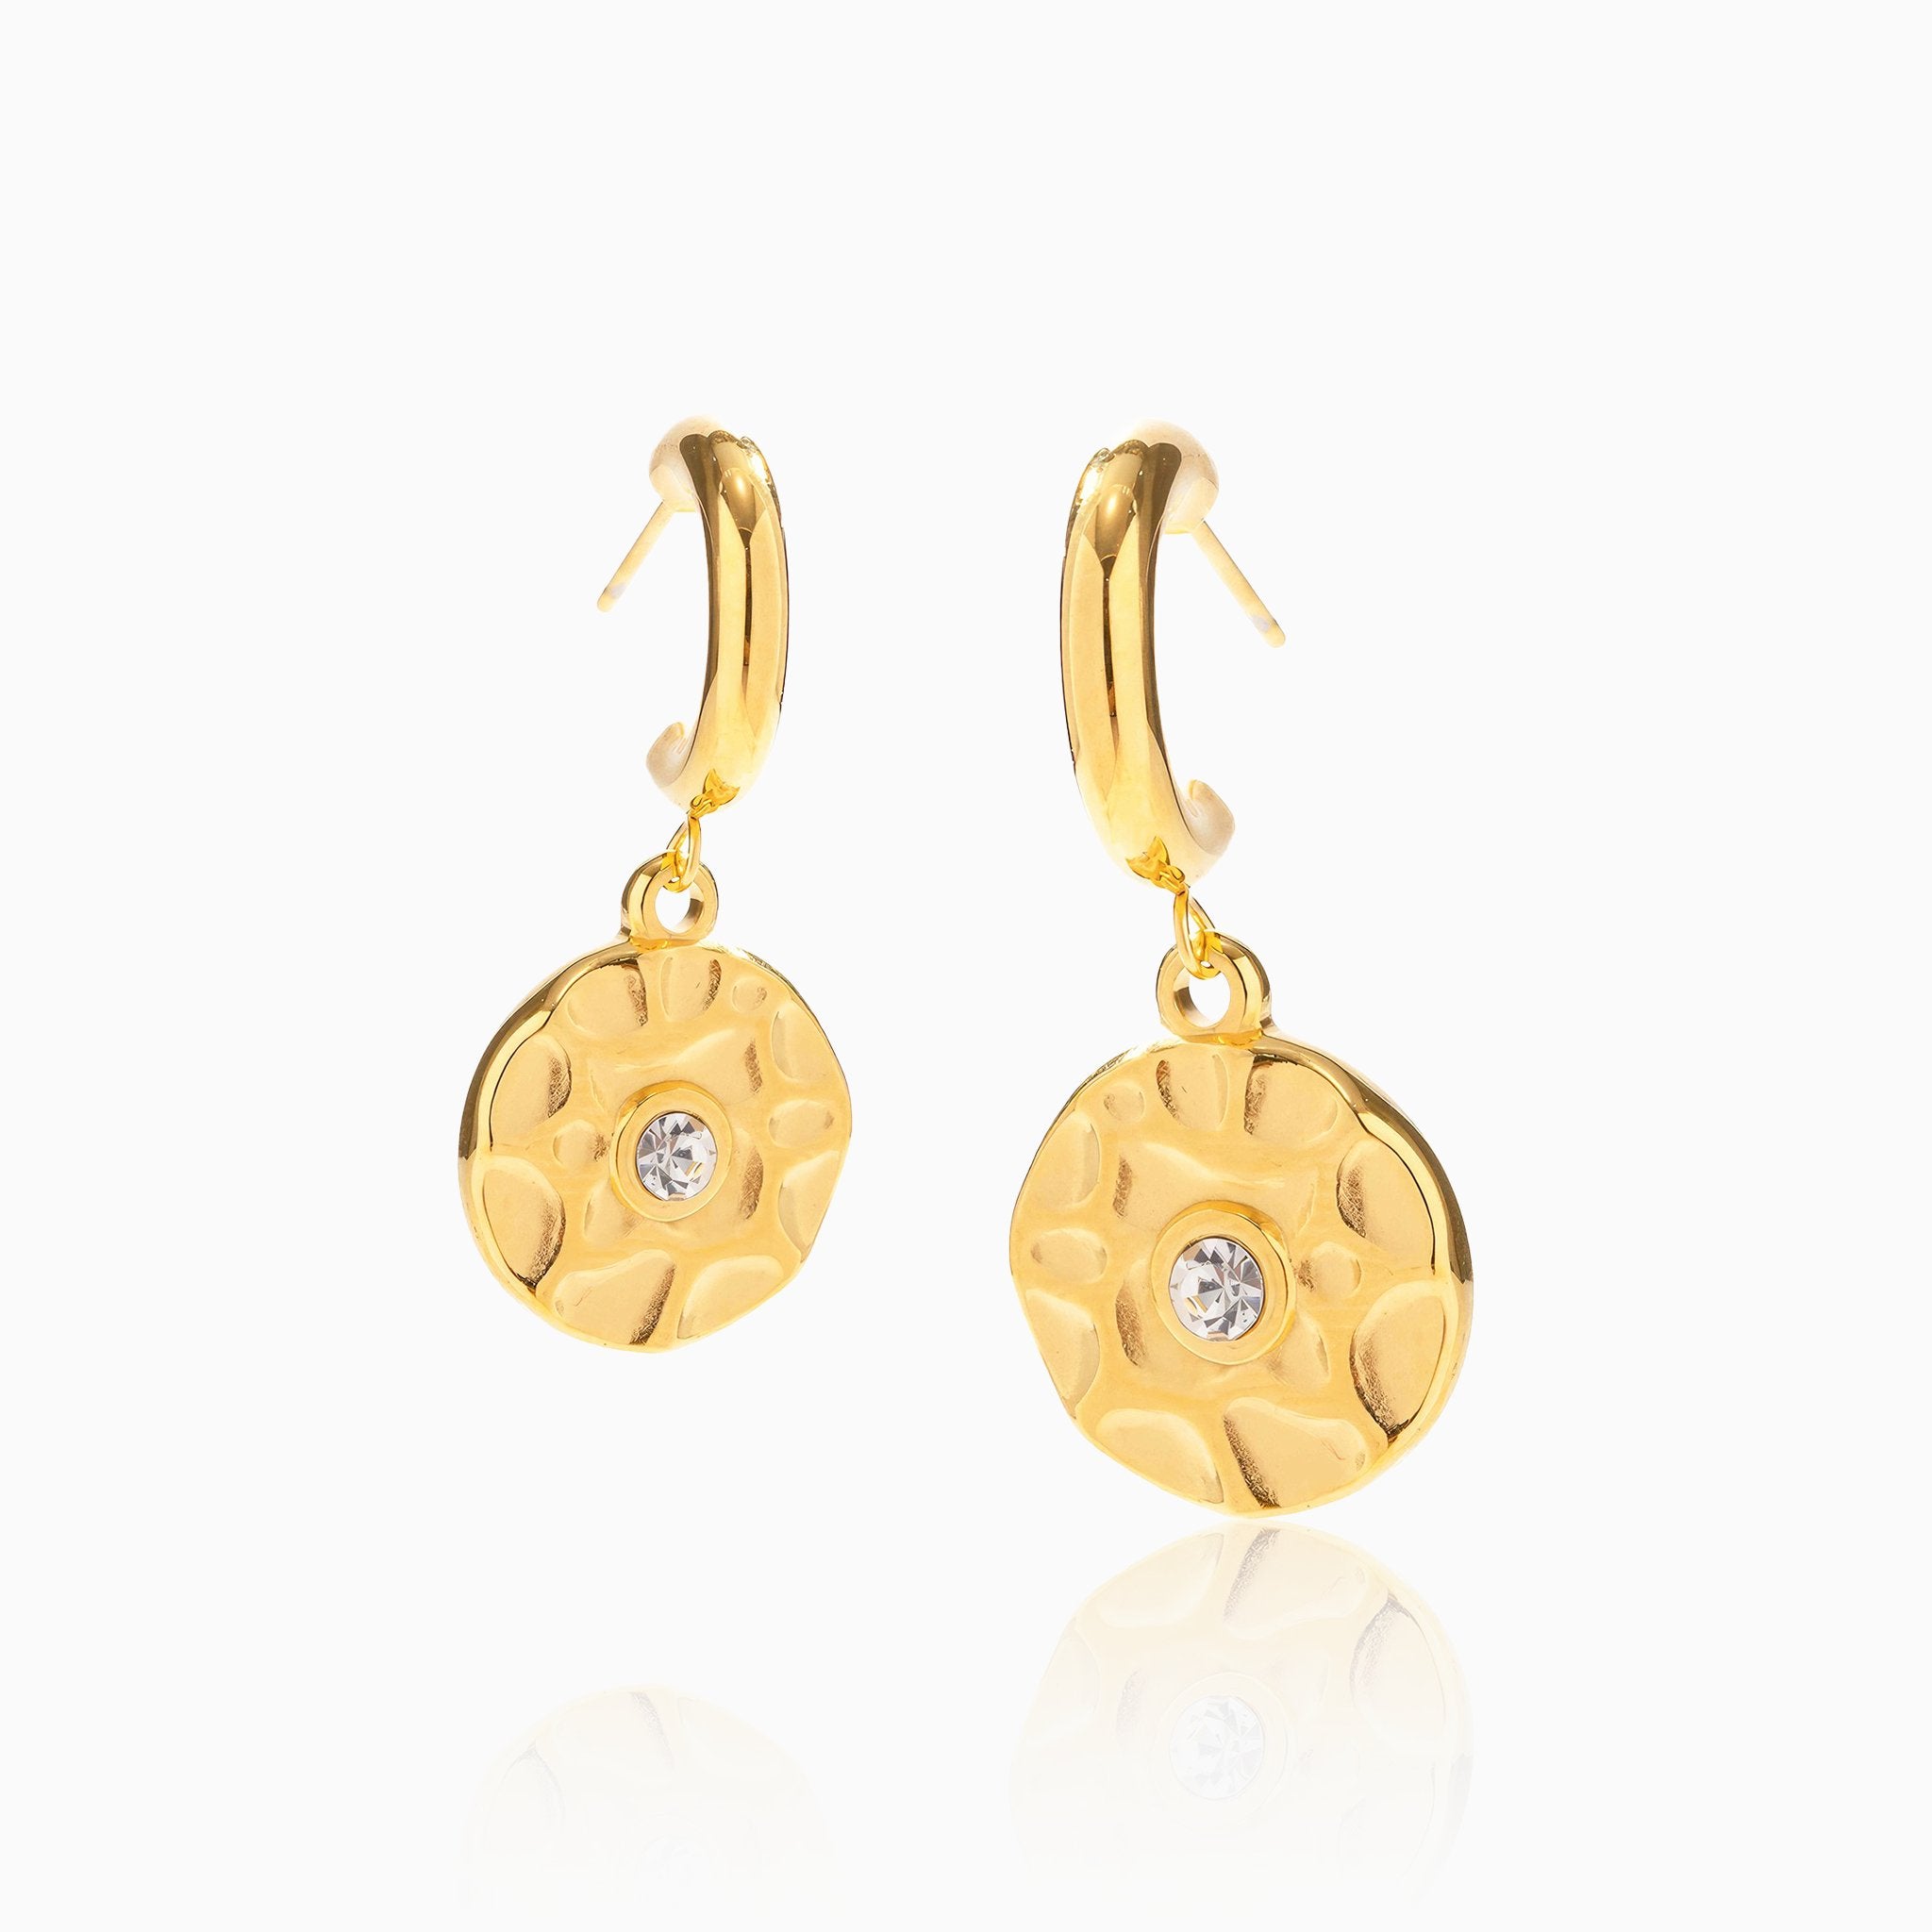 Geometric Diamond Circle Earrings - Nobbier - Earrings - 18K Gold And Titanium PVD Coated Jewelry